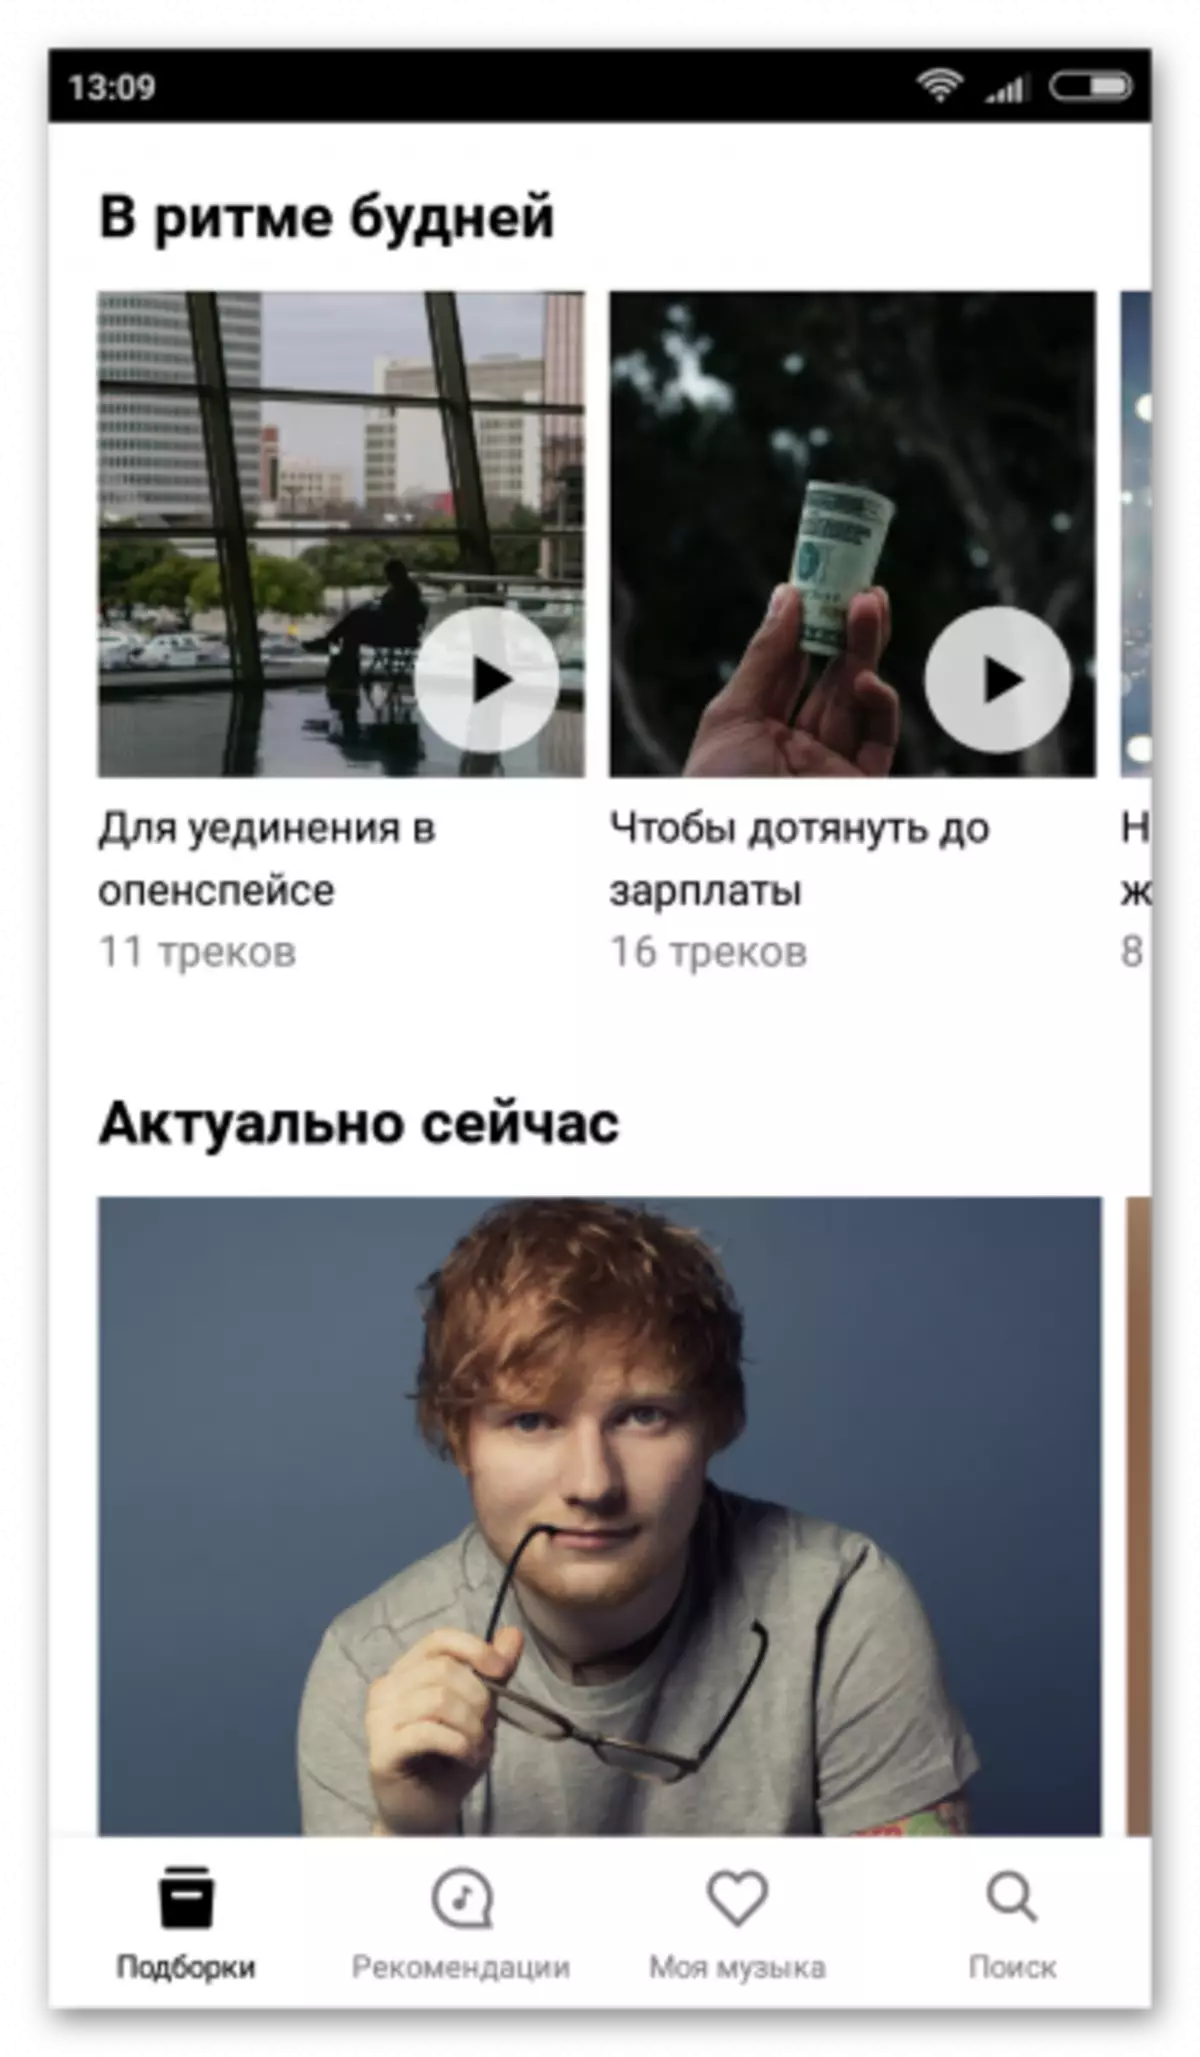 Yandex.music lori Android